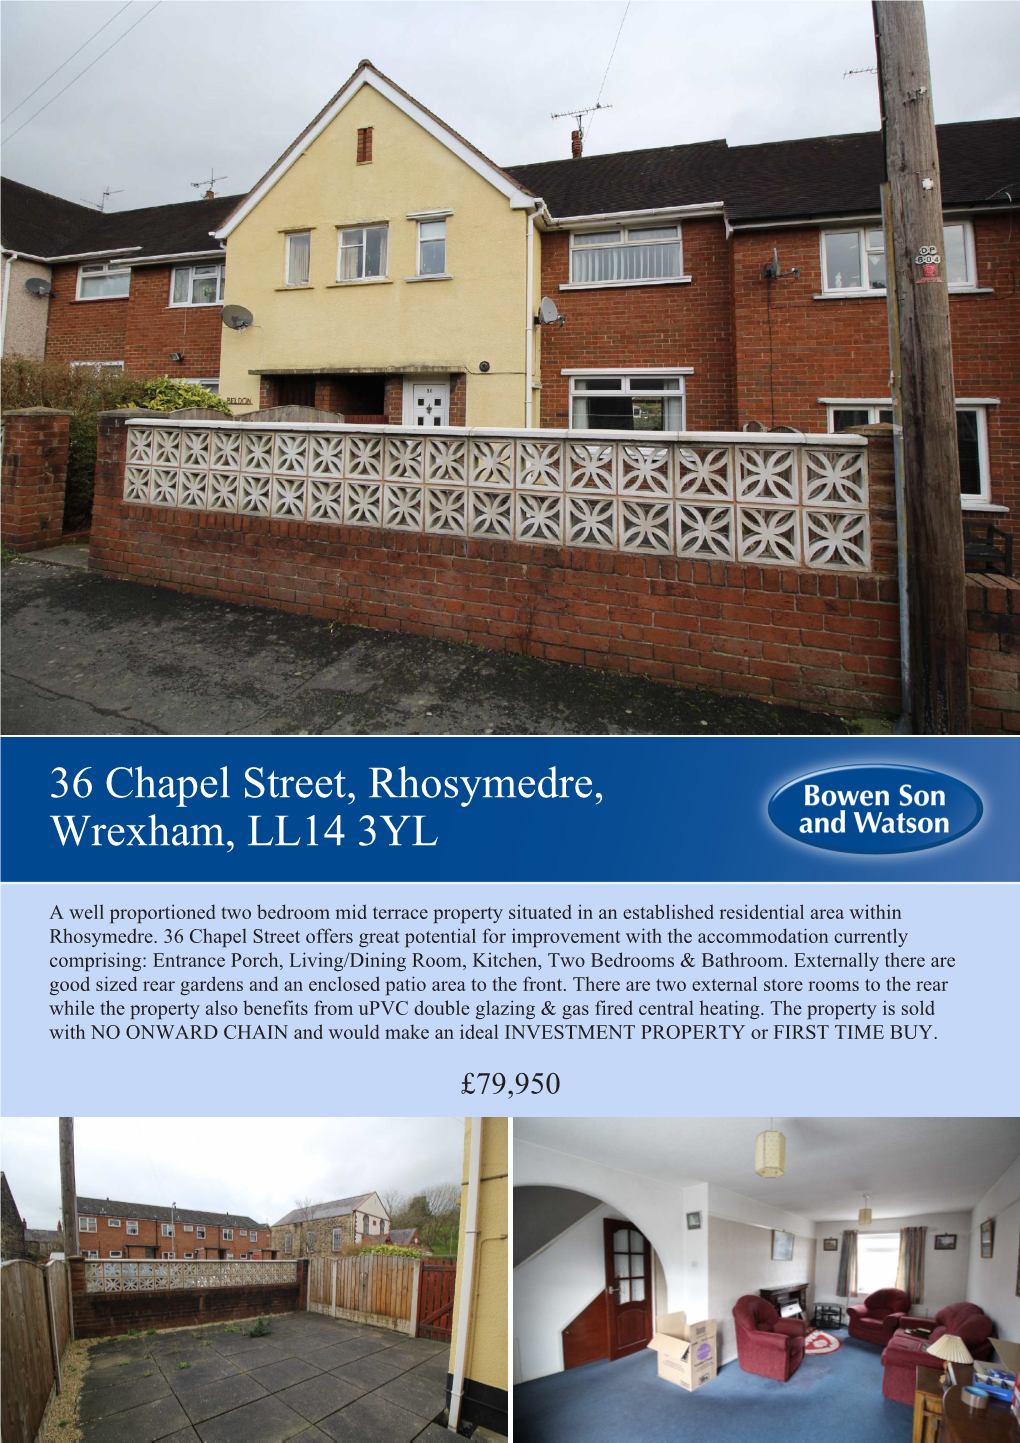 36 Chapel Street, Rhosymedre, Wrexham, LL14 3YL